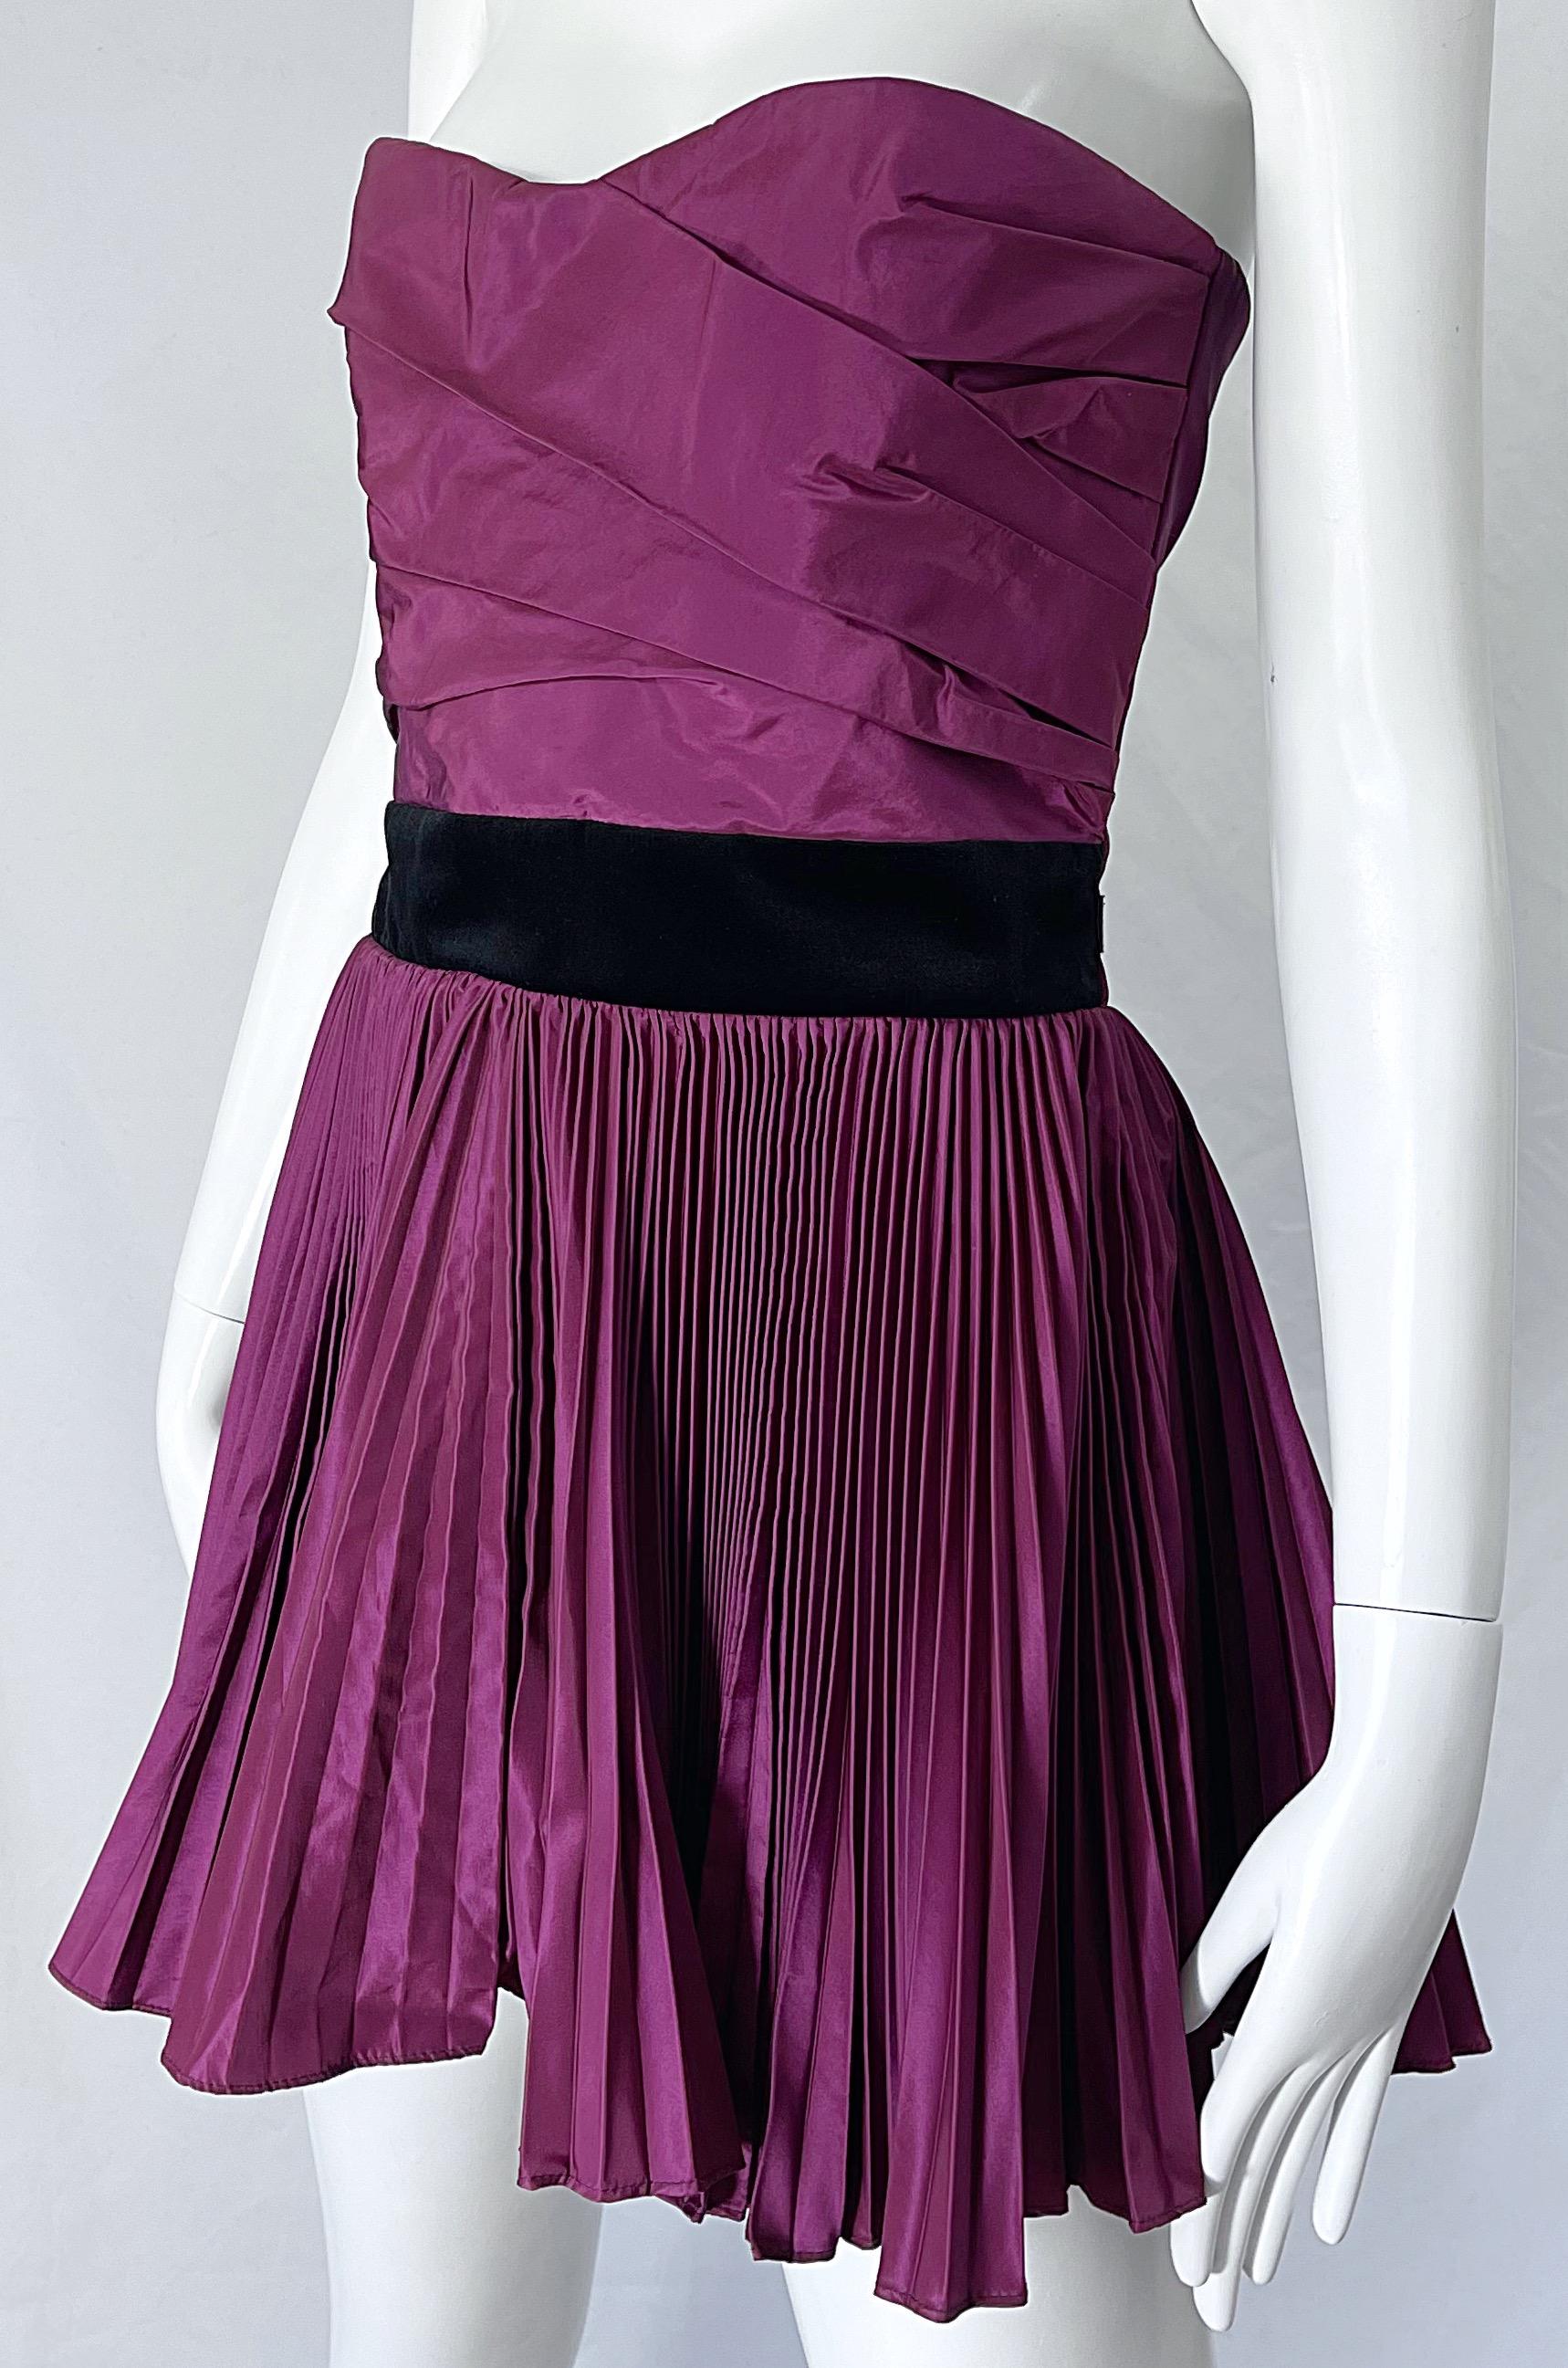 Yves Saint Laurent S/S 2012 Stefano Pilati Purple Silk Taffeta Mini Dress or Top In Excellent Condition For Sale In San Diego, CA